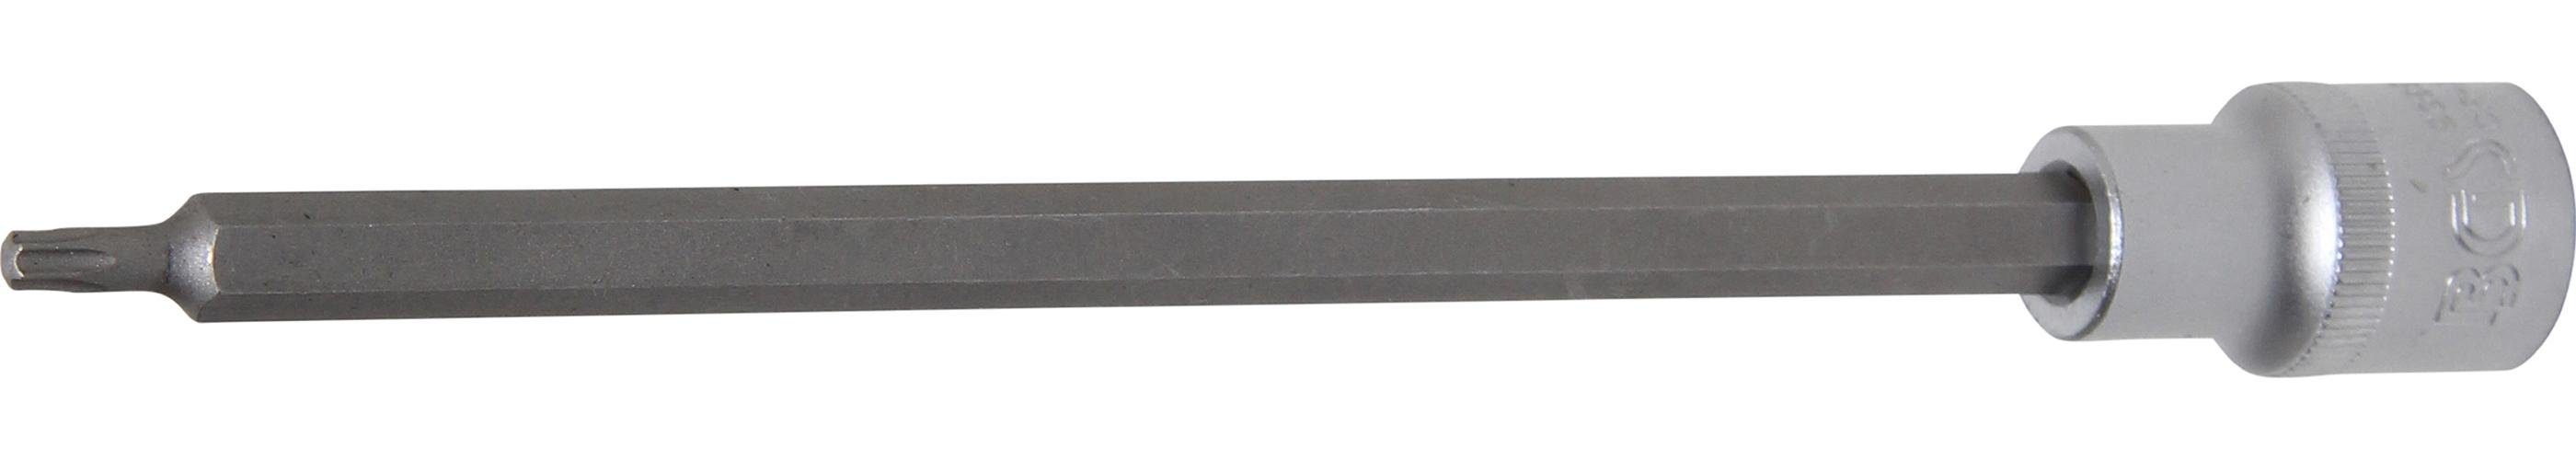 BGS technic Bit-Schraubendreher Bit-Einsatz, Länge 200 mm, Antrieb Innenvierkant 12,5 mm (1/2), T-Profil (für Torx) T25